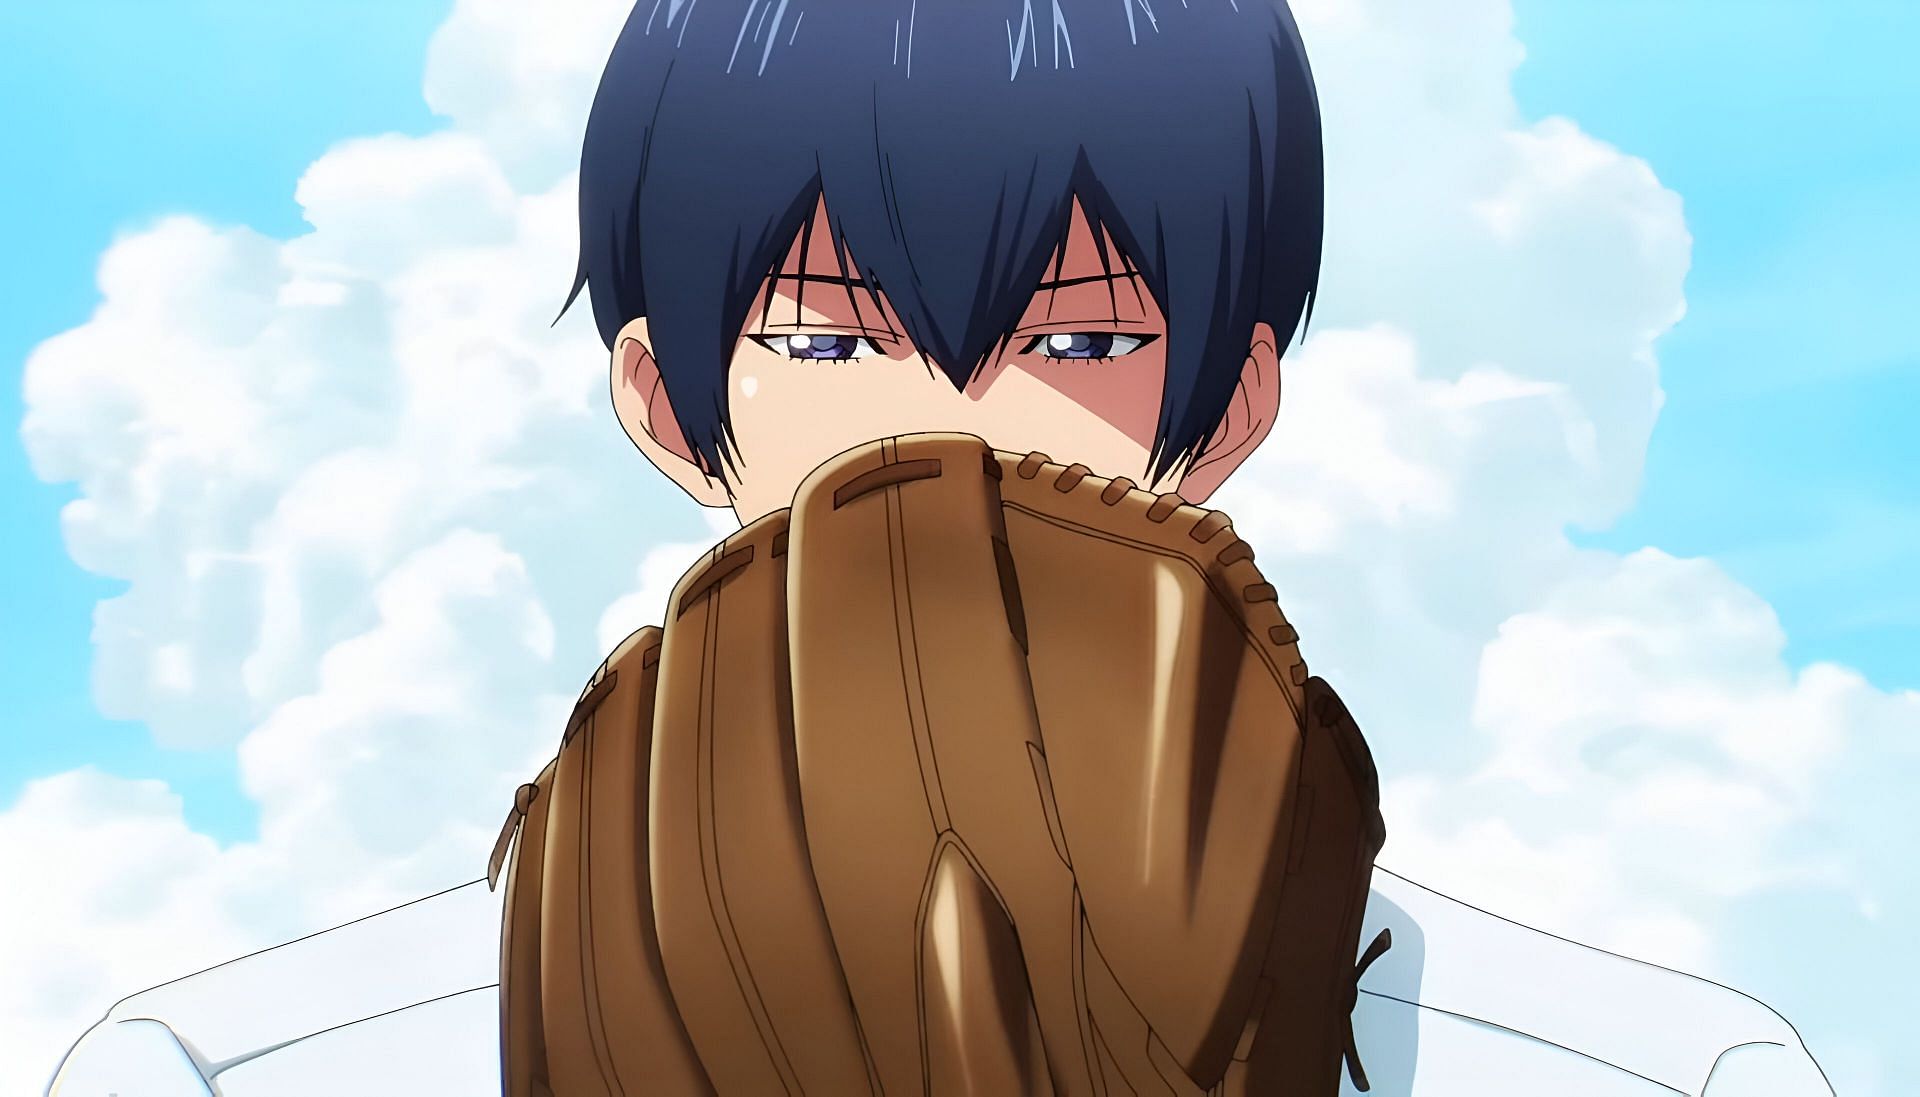 Rekomendasi Anime Baseball Terbaik dengan Cerita Seru - Varia Katadata.co.id